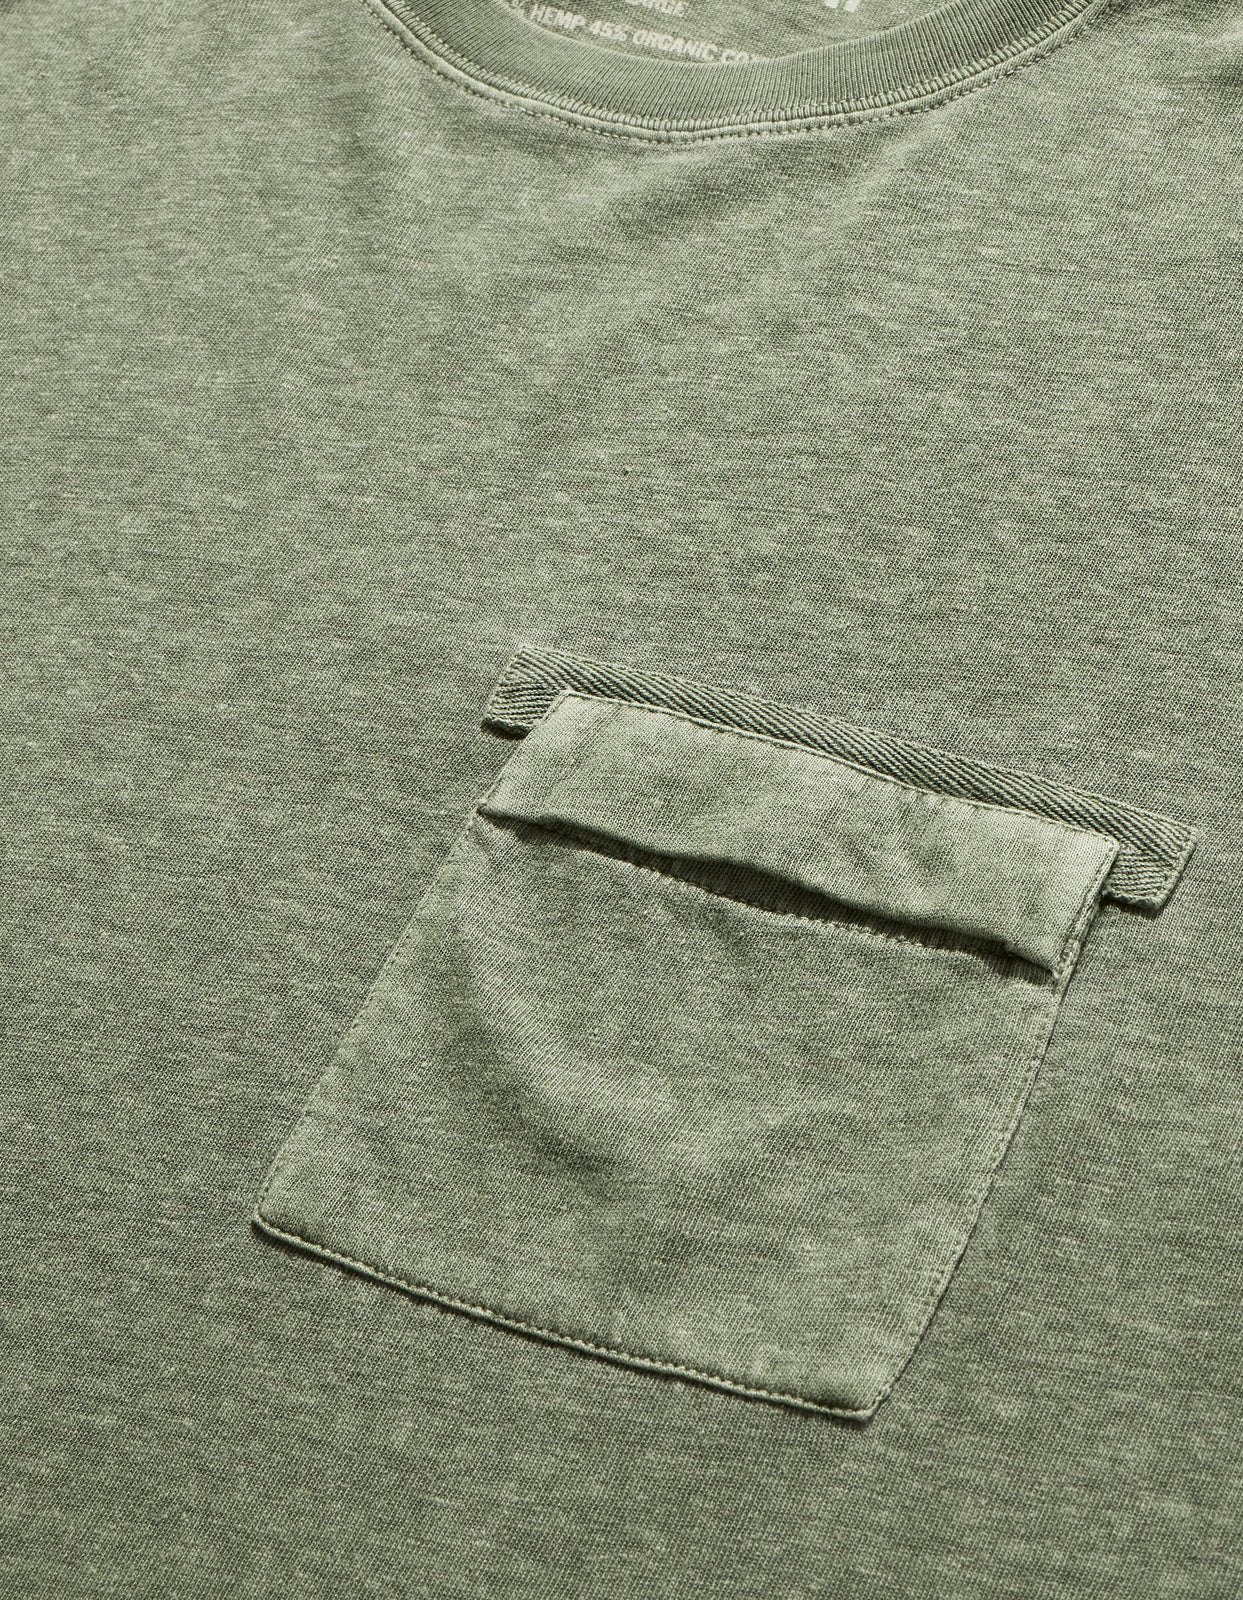 7021 Hemp Organic Pocket T-Shirt Olive OG-107F